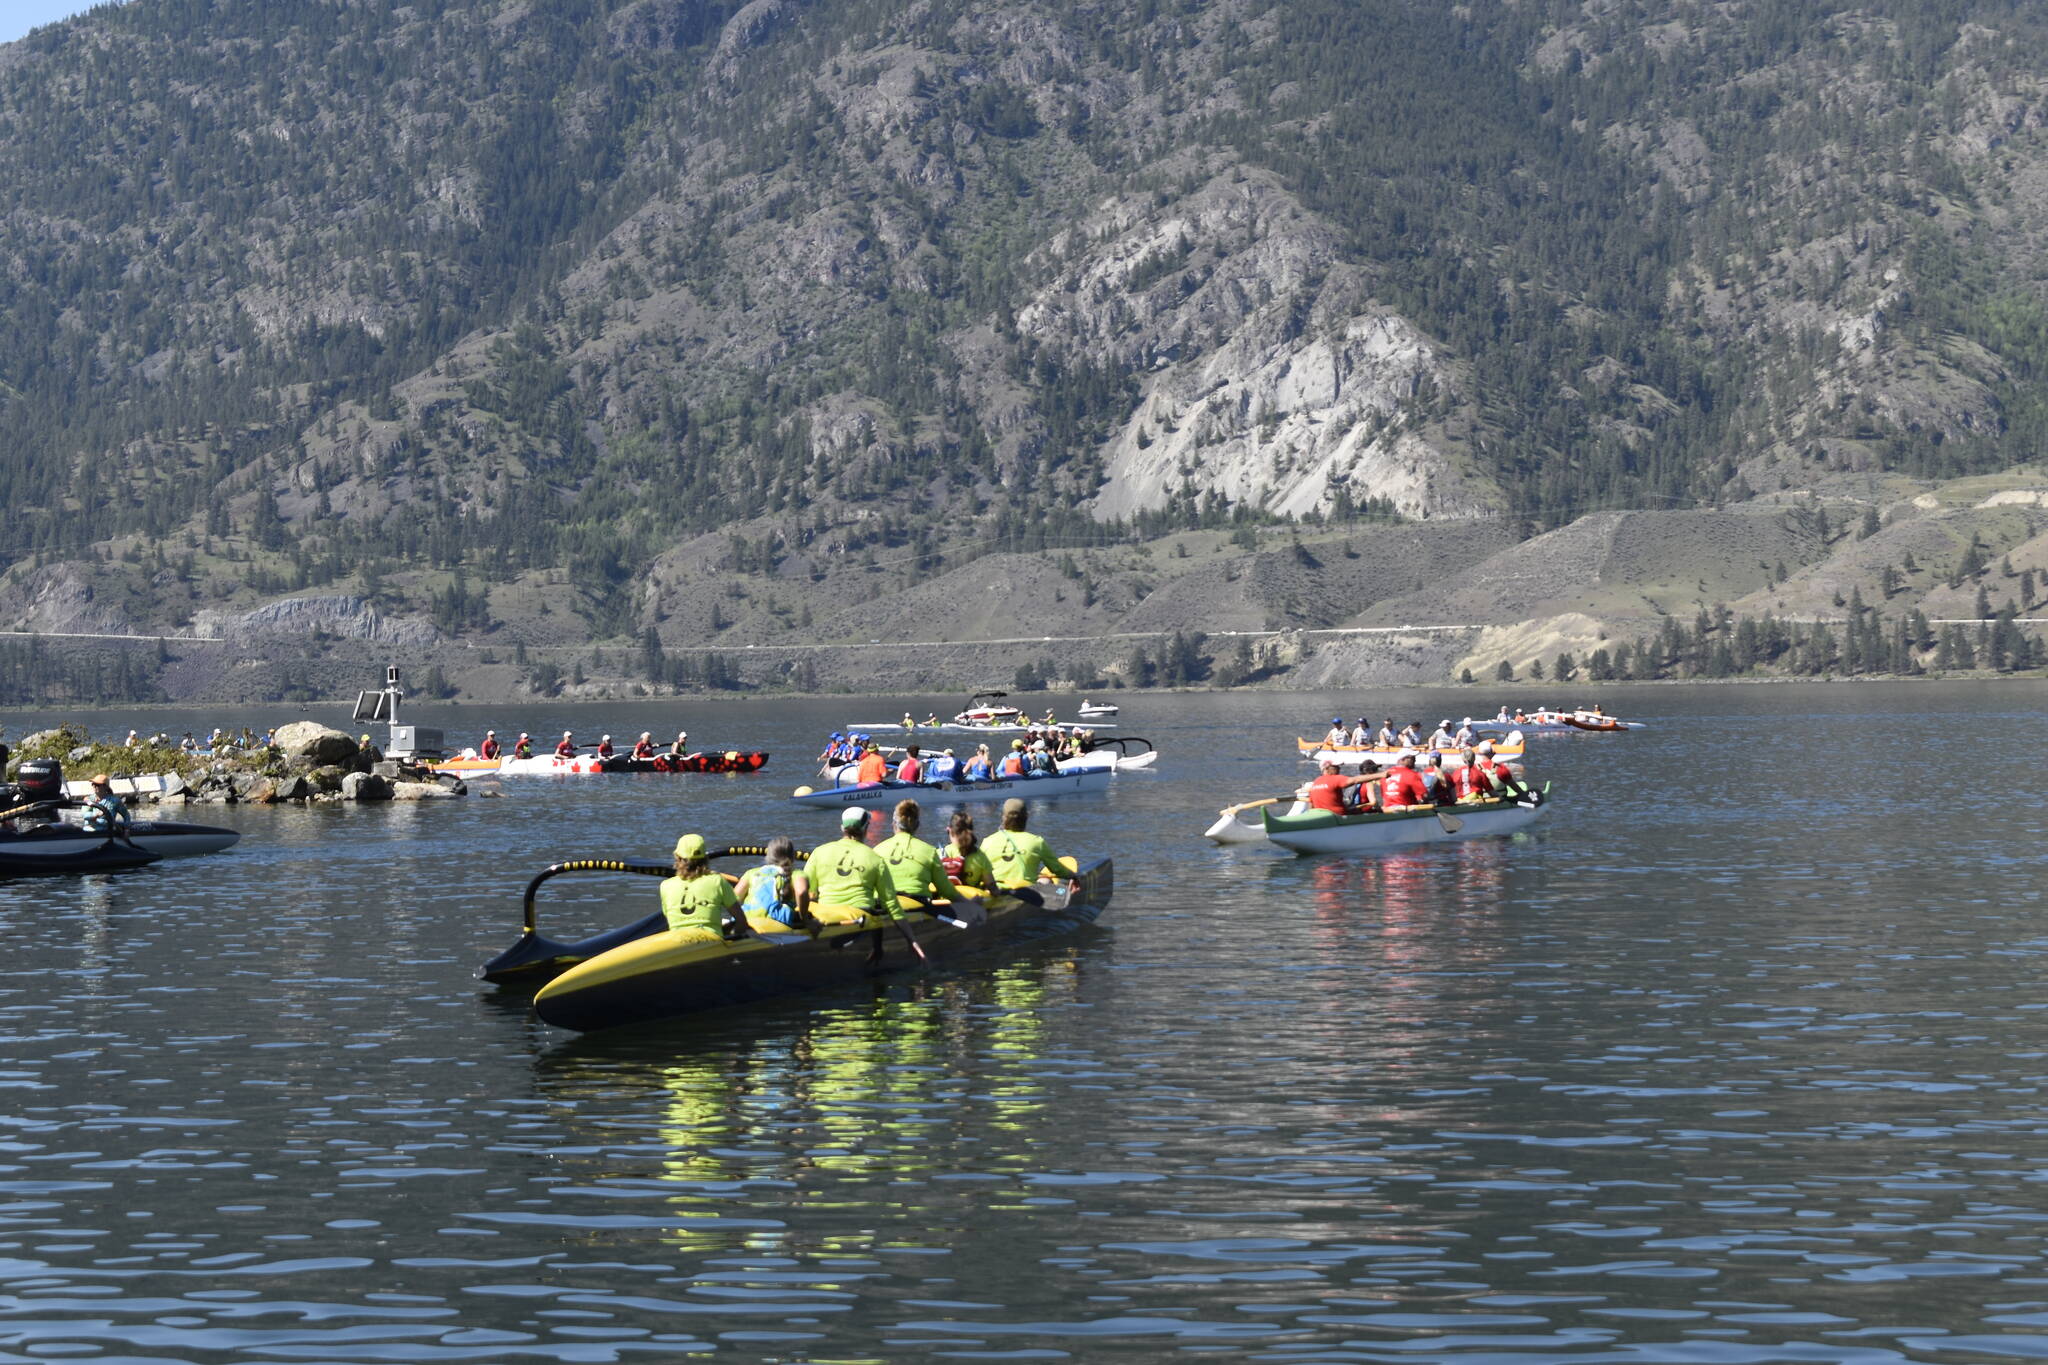 Canoe race teams from across Western Canada on Skaha Lake in Penticton on May 11. (Logan Lockhart/Western News)